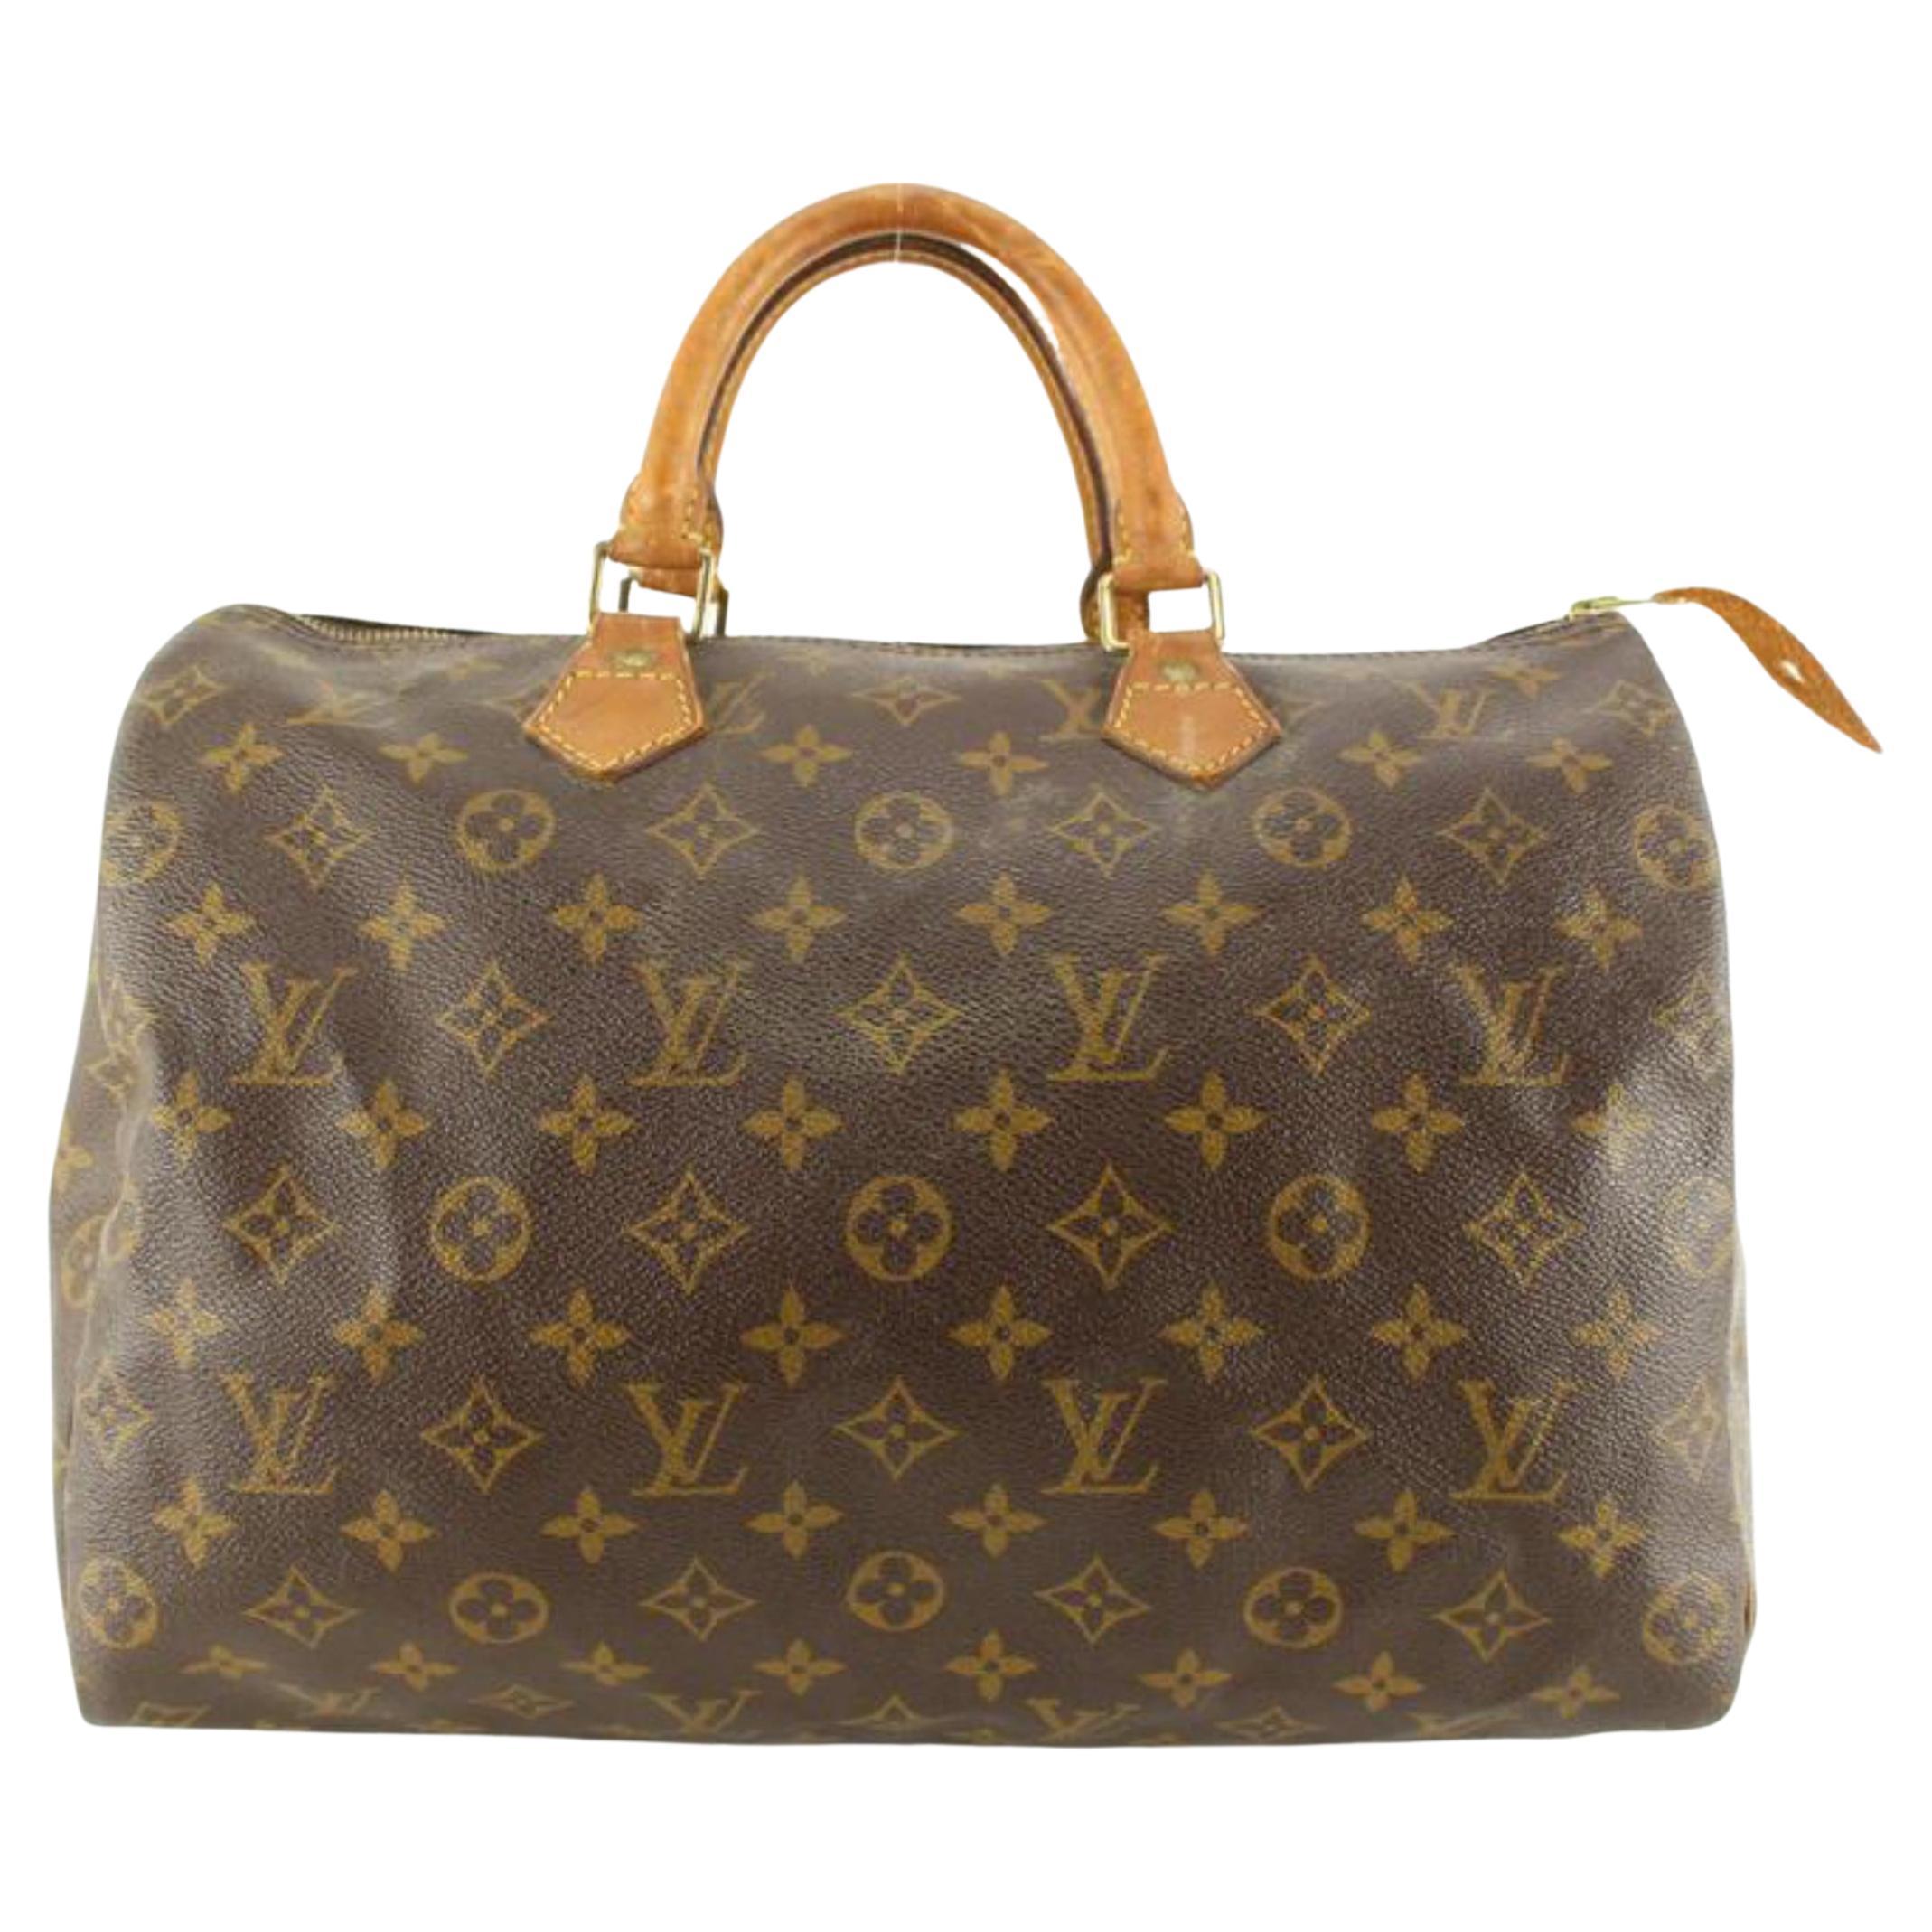 Louis Vuitton Monogram Speedy 35 Boston Bag 13lz712s